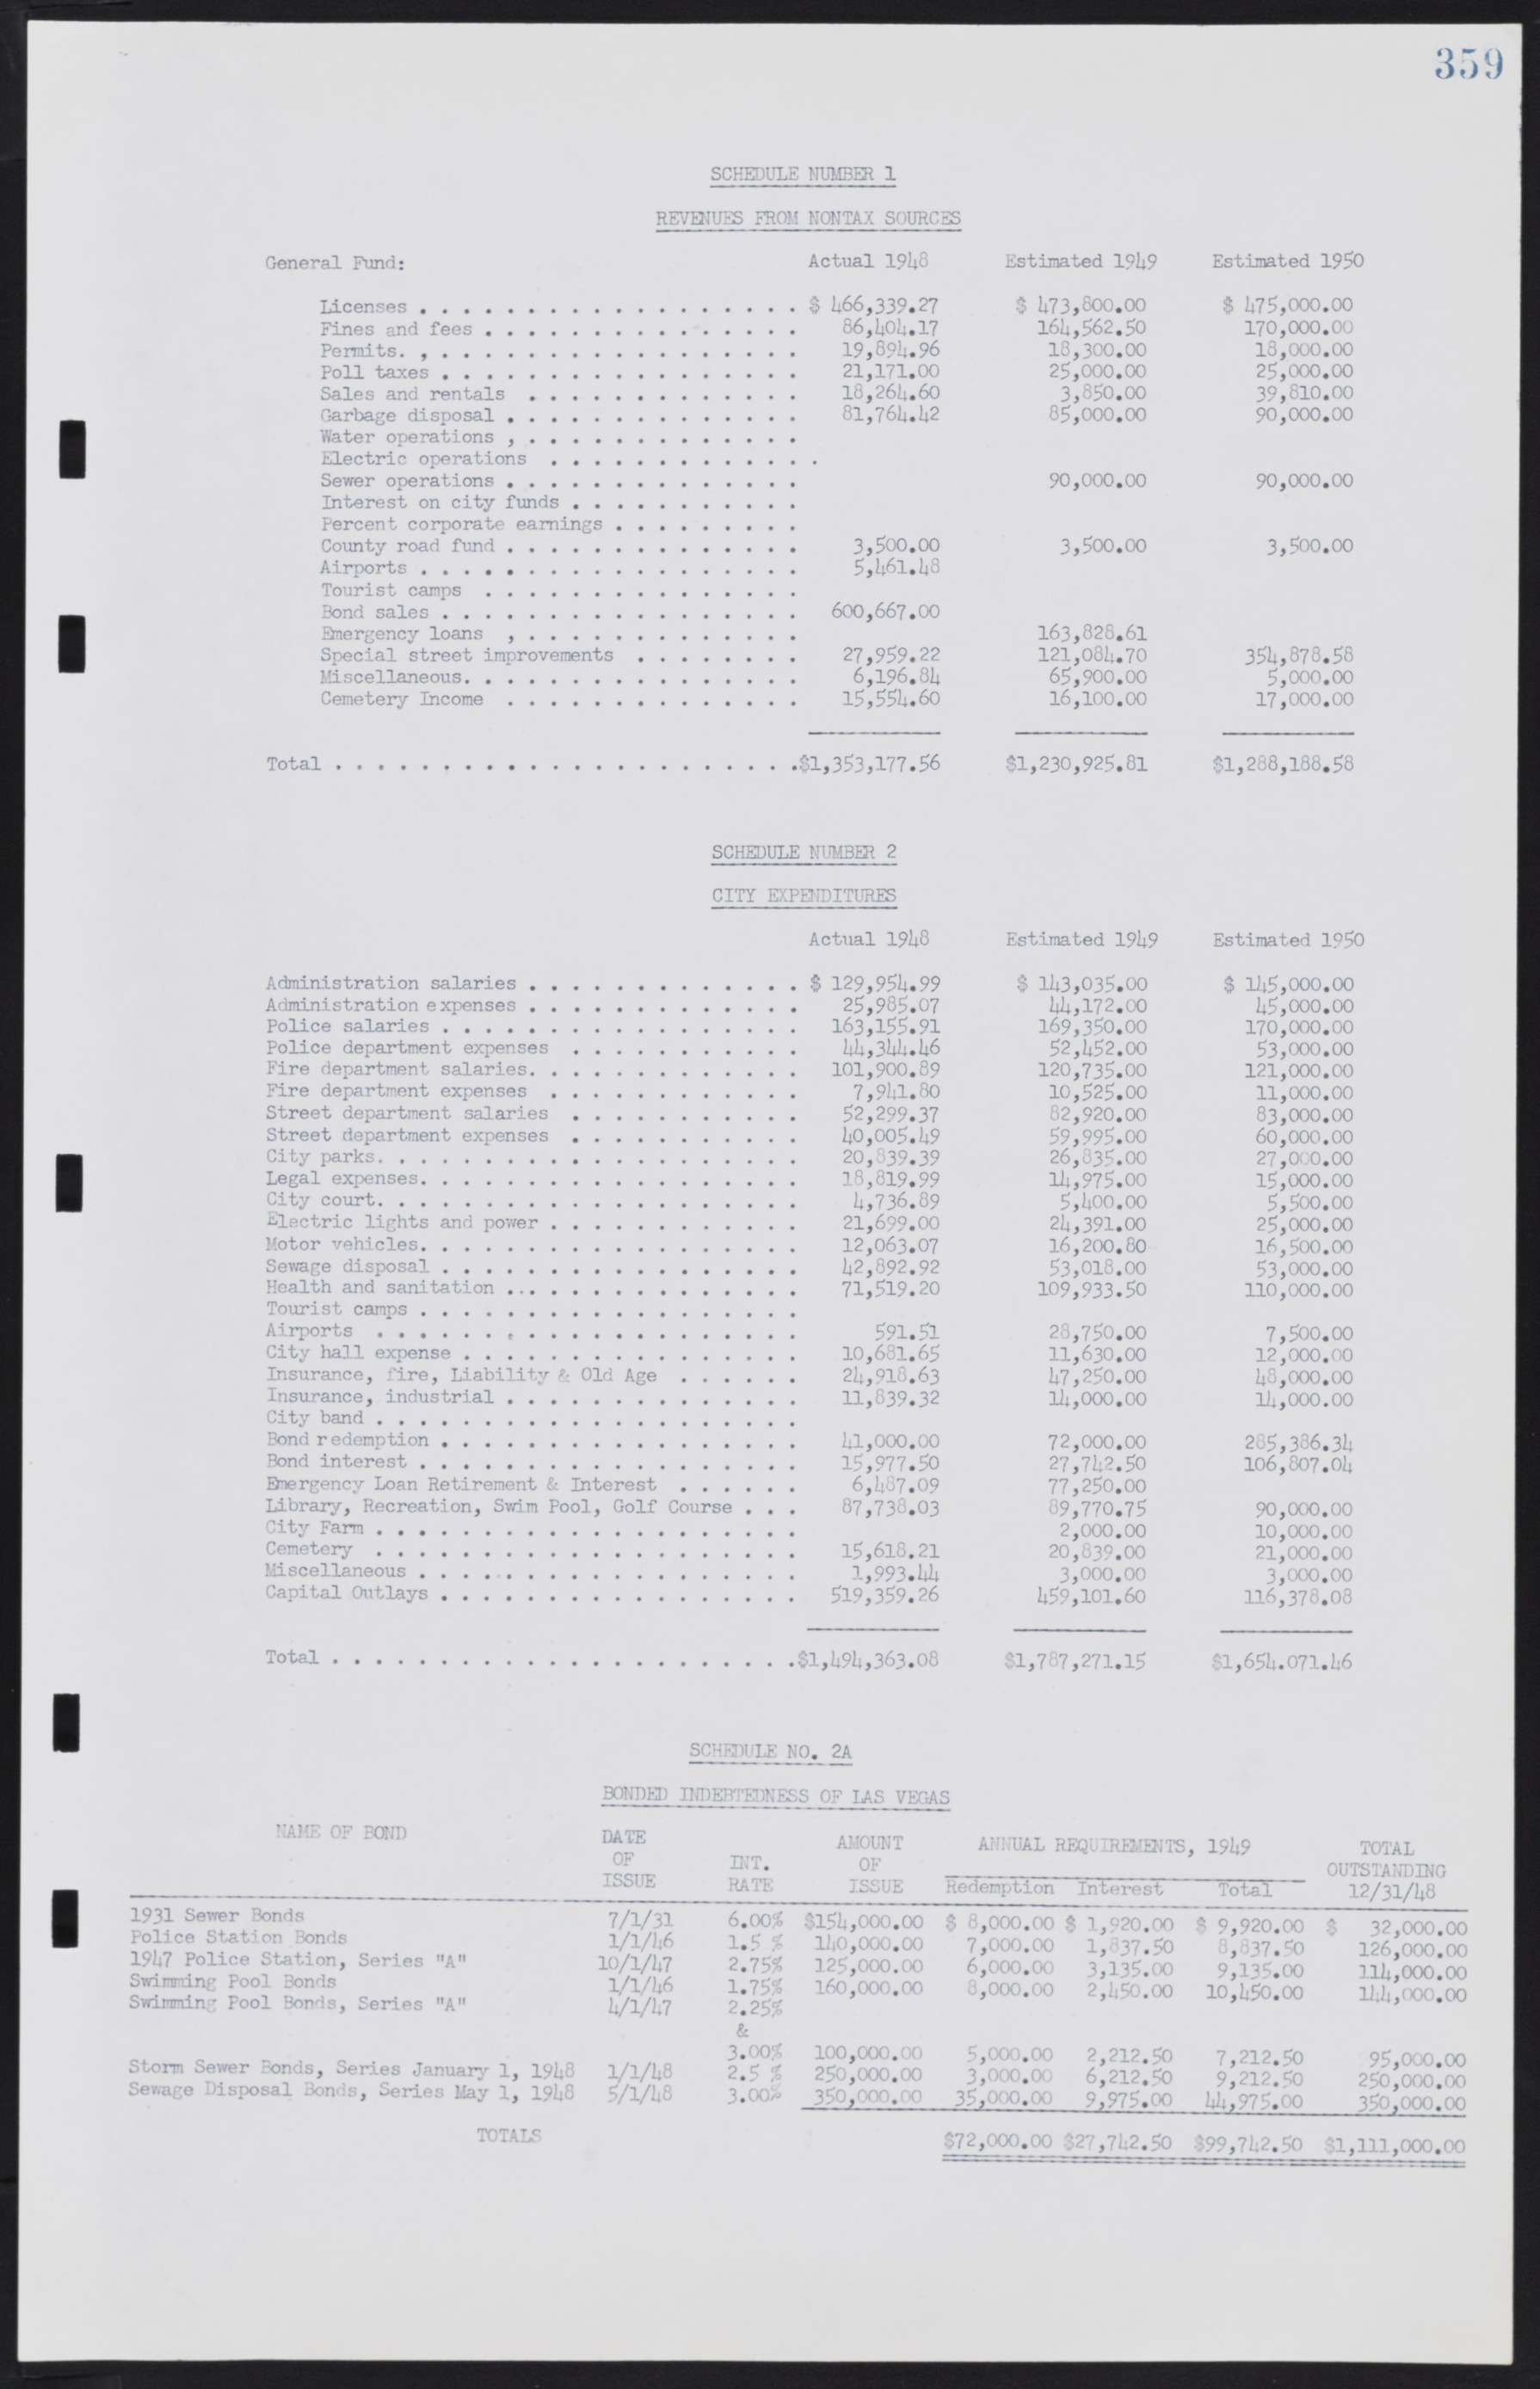 Las Vegas City Commission Minutes, January 7, 1947 to October 26, 1949, lvc000006-389